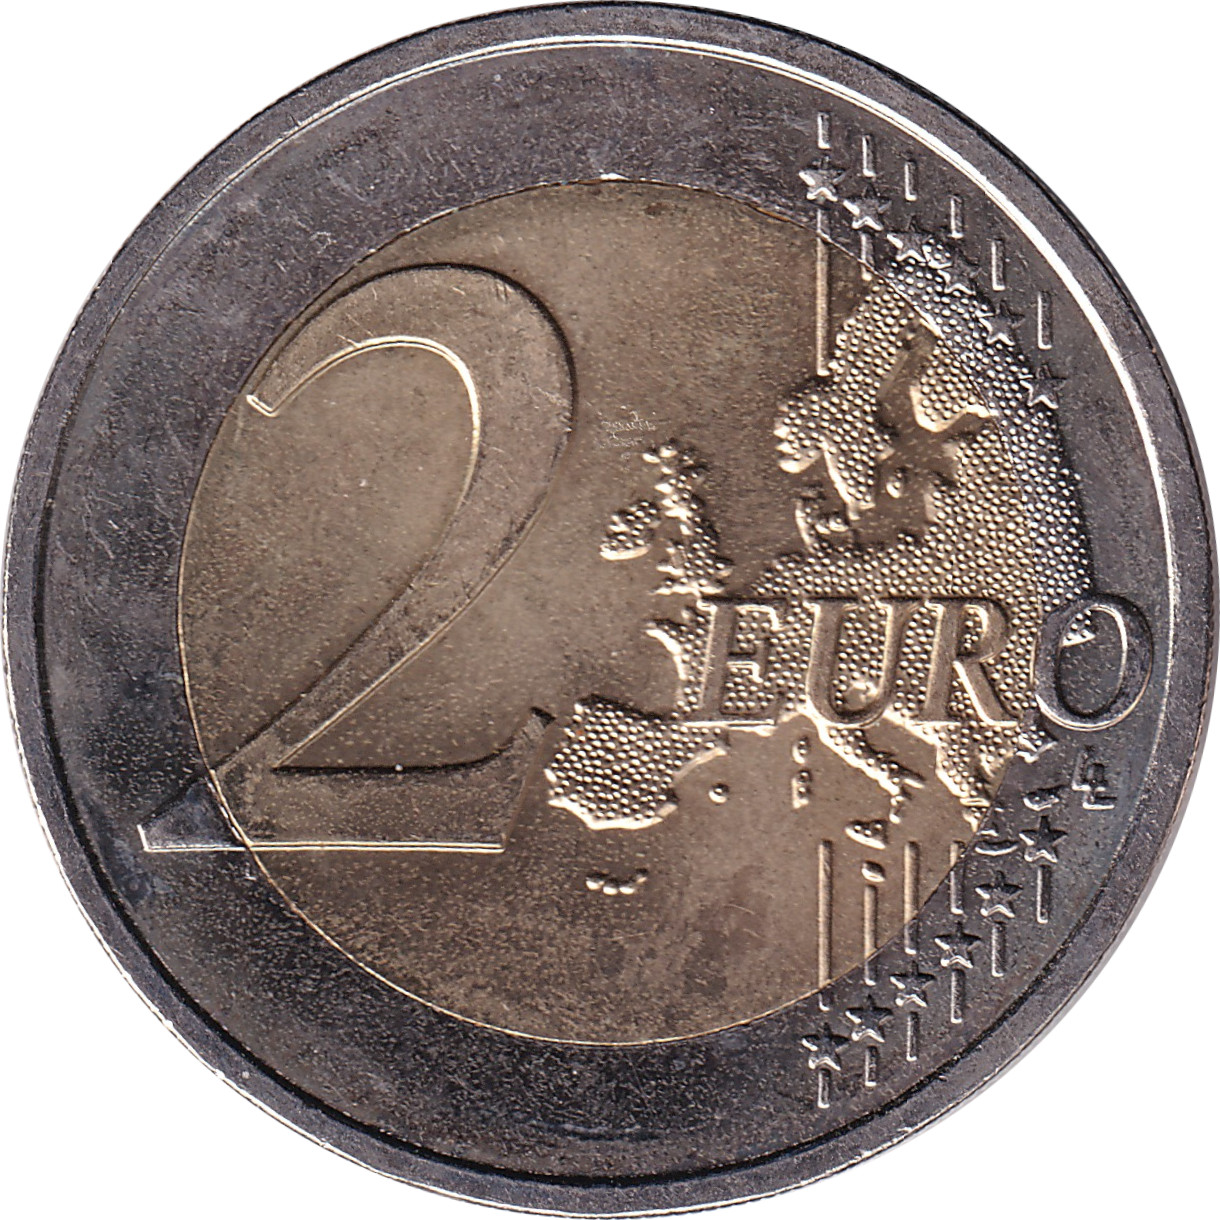 2 euro - Mise en circulation de l'Euro - 10 years